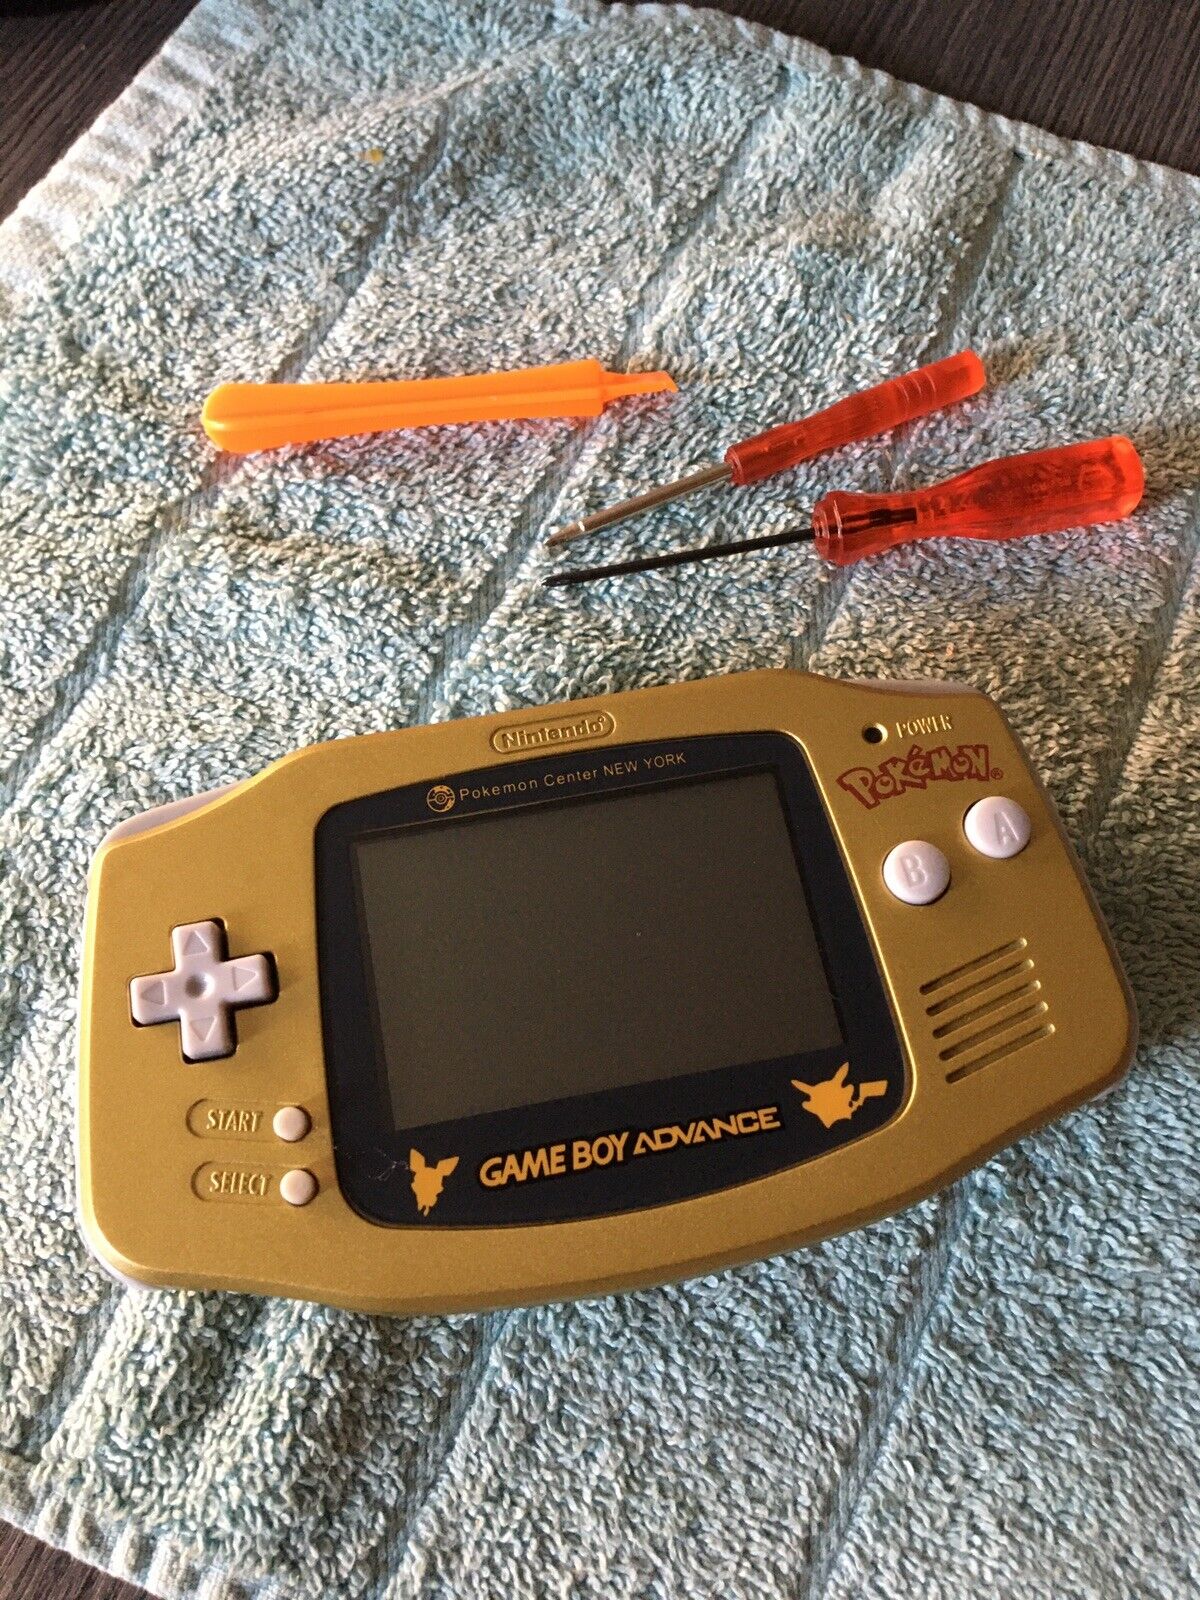 Nintendo Gameboy Advance Gold Pokemon Console GBA Glass Lens Cart Refurbished Nintendo gameboy advance